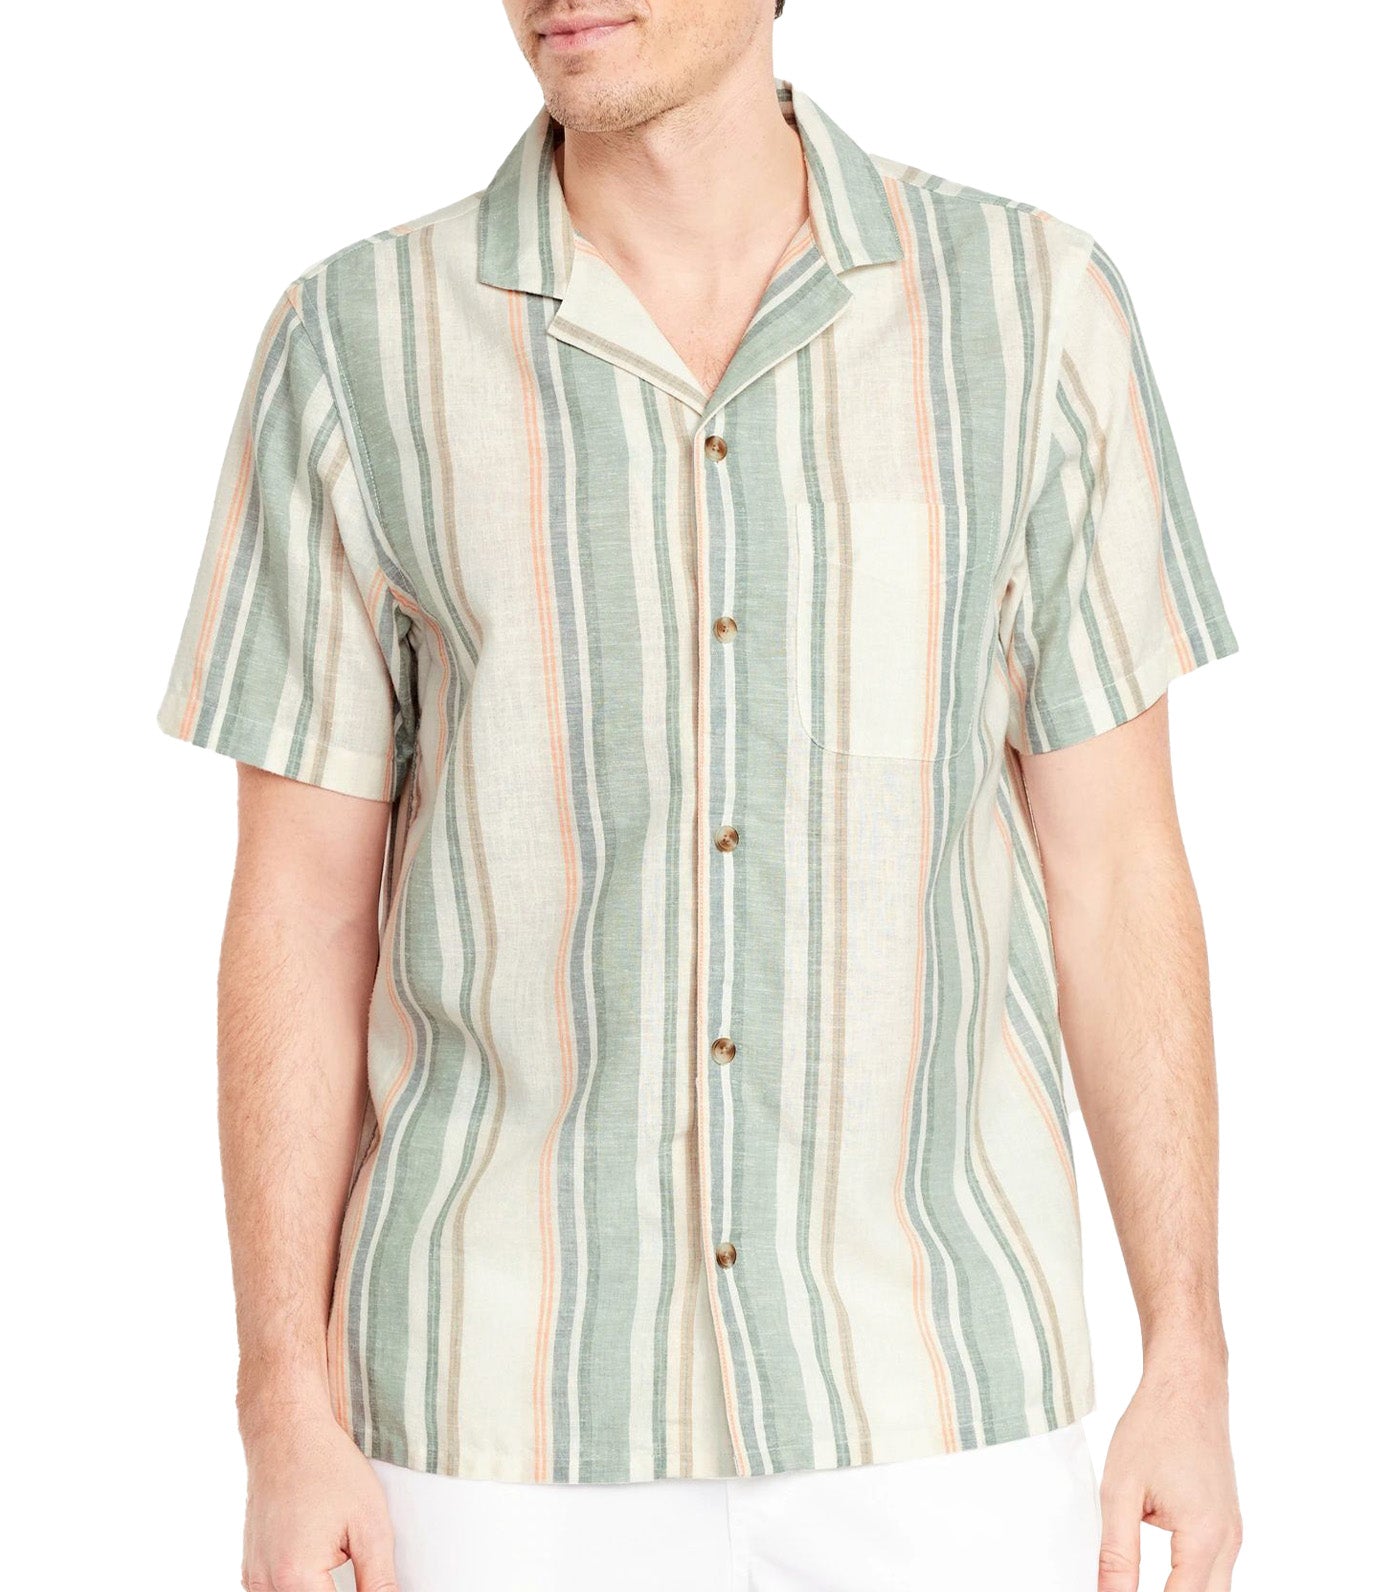 Short-Sleeve Printed Camp Shirt for Men Blue/Green Stripe